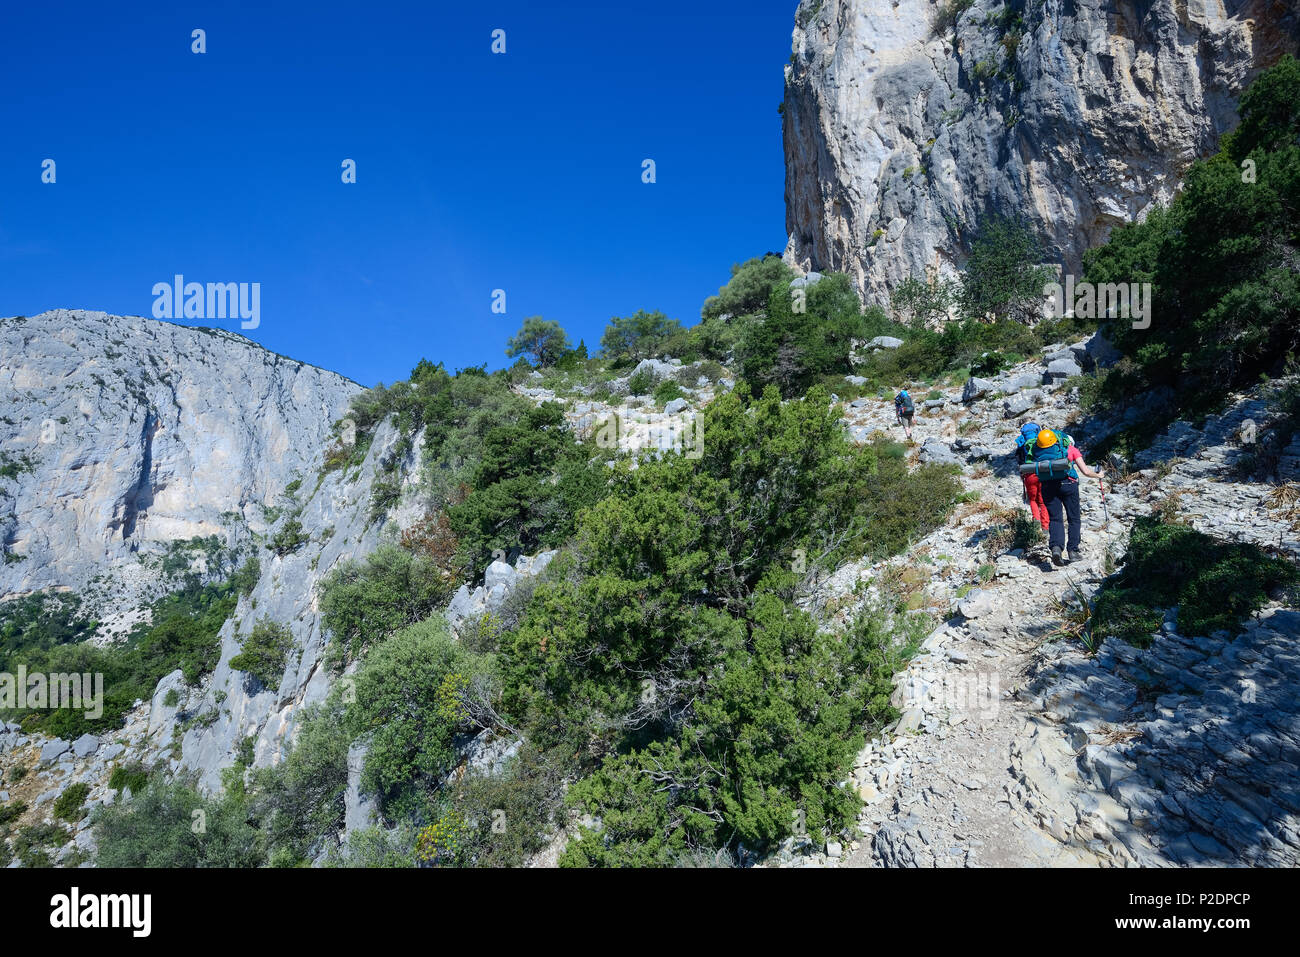 Two young women and a young man hiking through the mountainous coastline, Selvaggio Blu, Sardinia, Italy, Europe Stock Photo